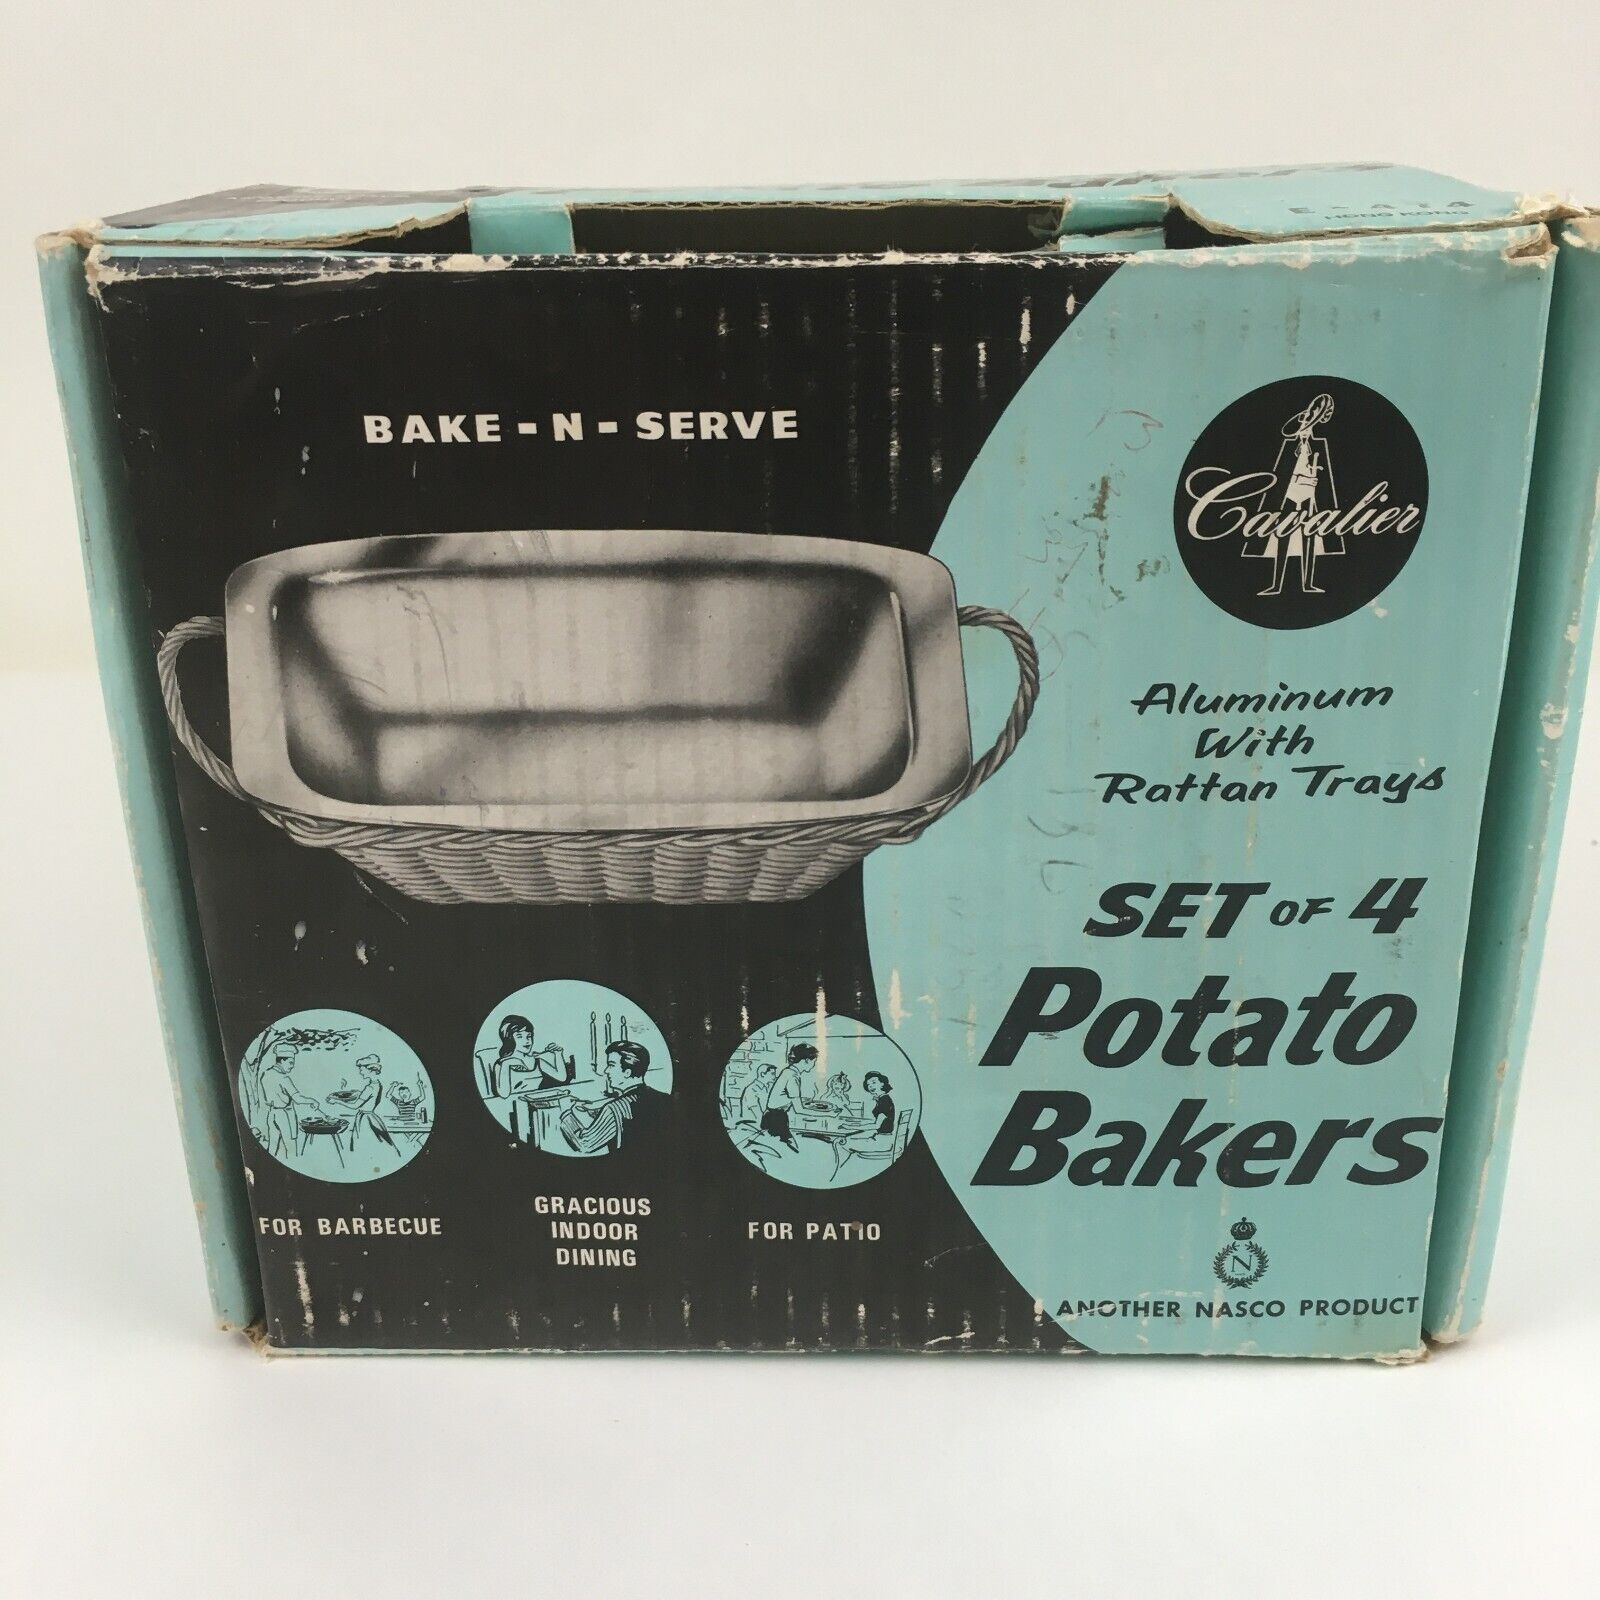 Vintage Nasco Cavalier Baking Pans Potatoe Bakers Baskets Mid Century Modern